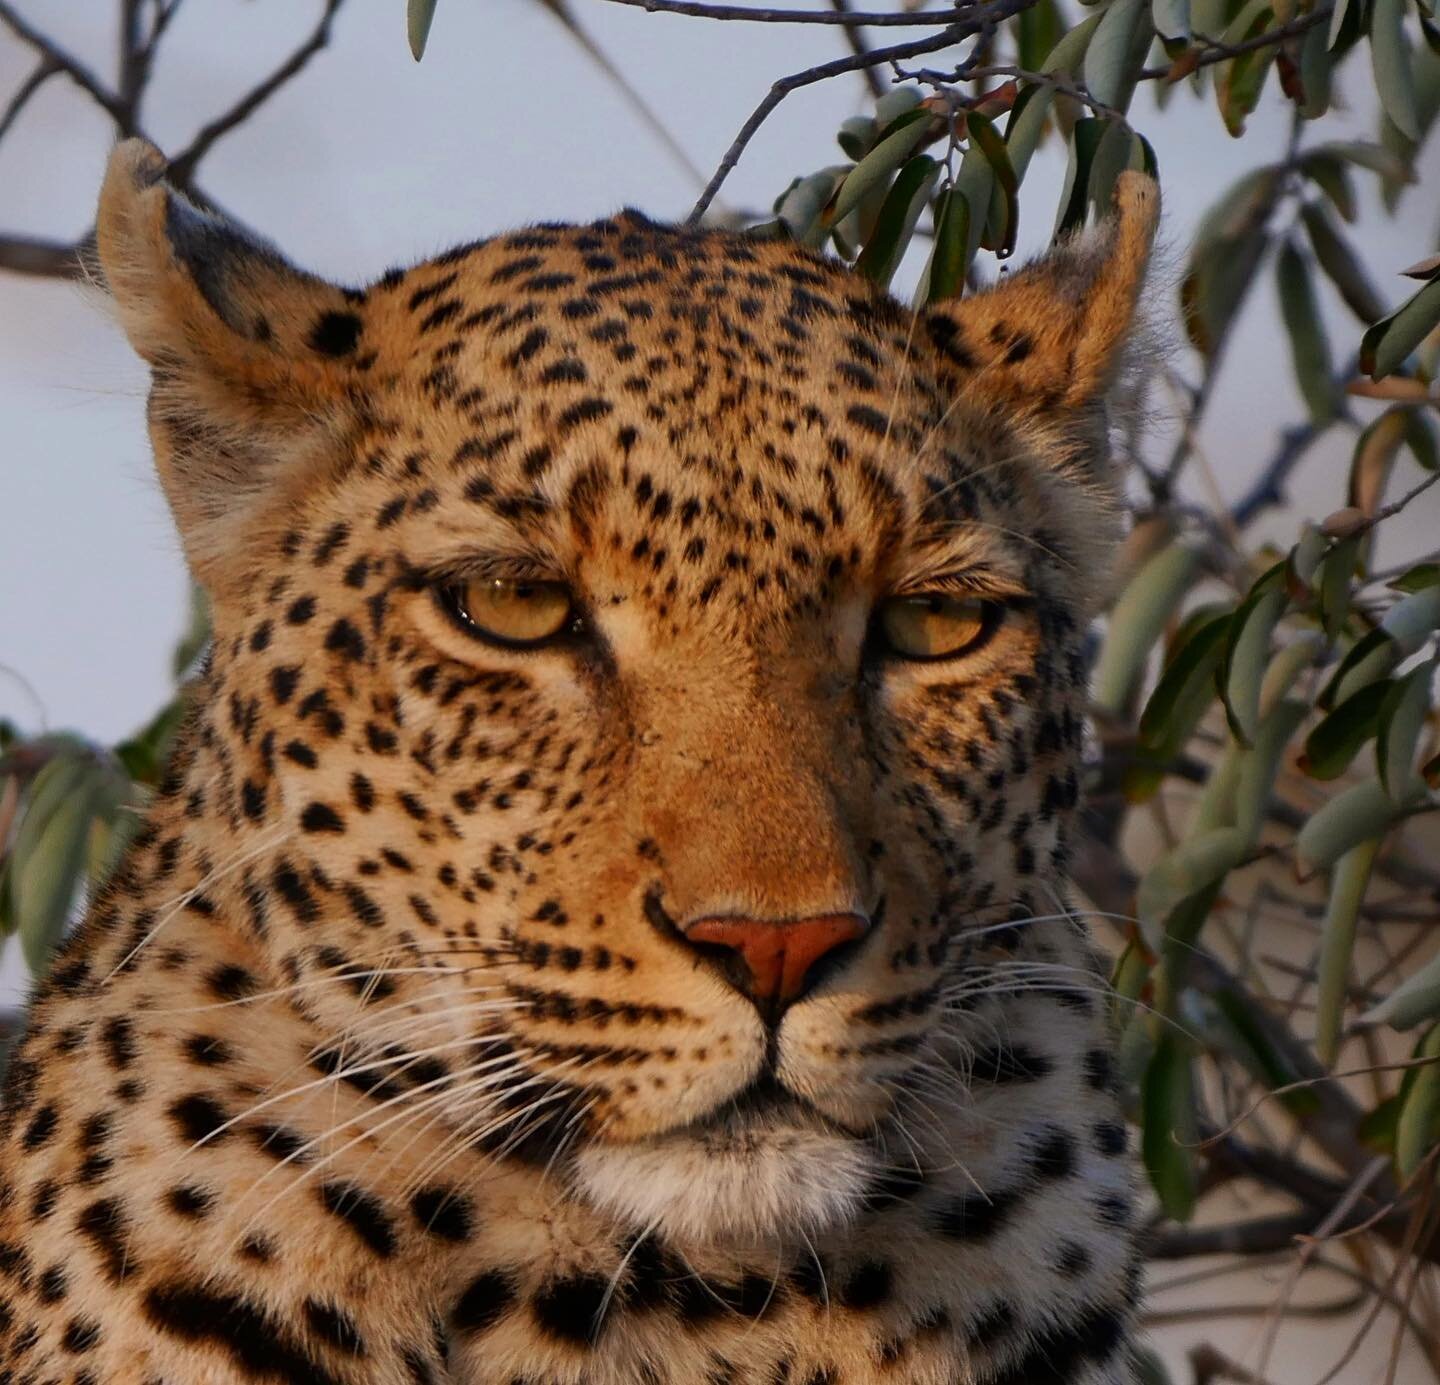 Leopard portrait
#leo #leopard #leopards #southafrica #afriquedusud #safari #safaris #luxurysafari #portrait #portraitphotography #animals #animal #animalcrossing #animallovers #animallover #animalphotography #animalsofinstagram #wildanimals #wild #w